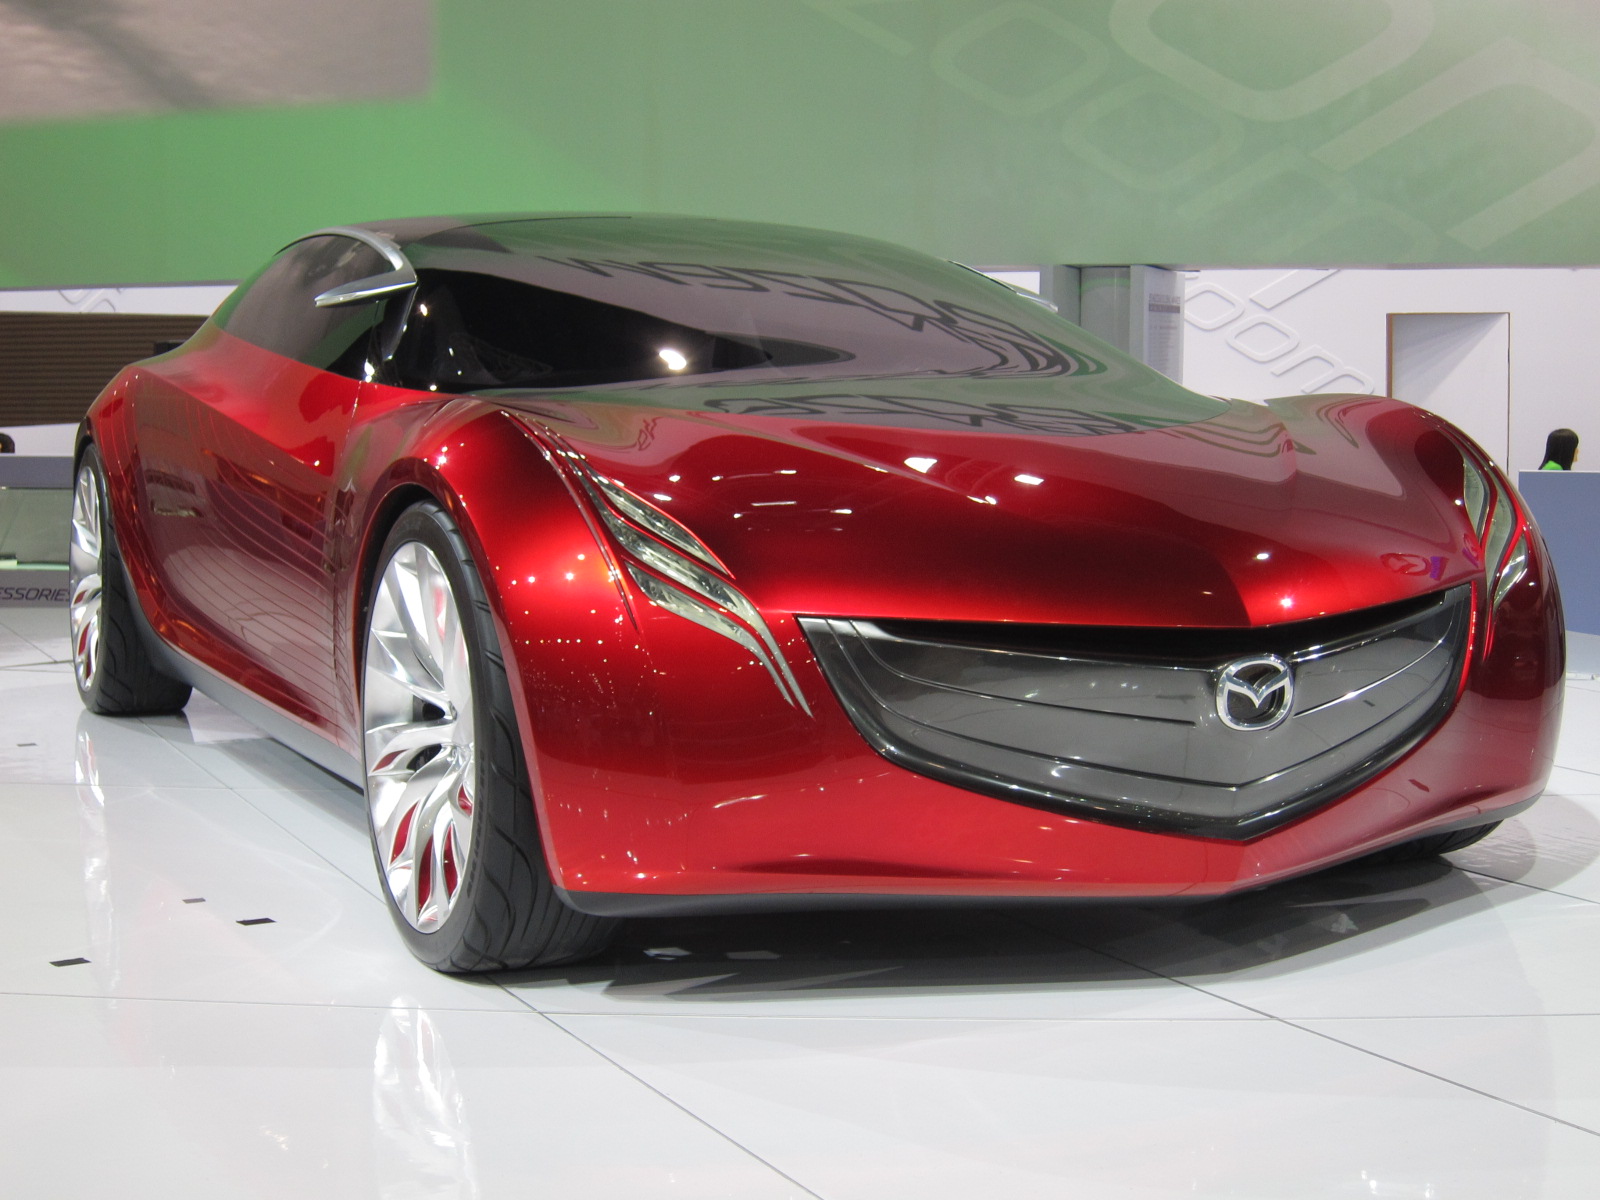 Mazda Prototype | Flickr - Photo Sharing!